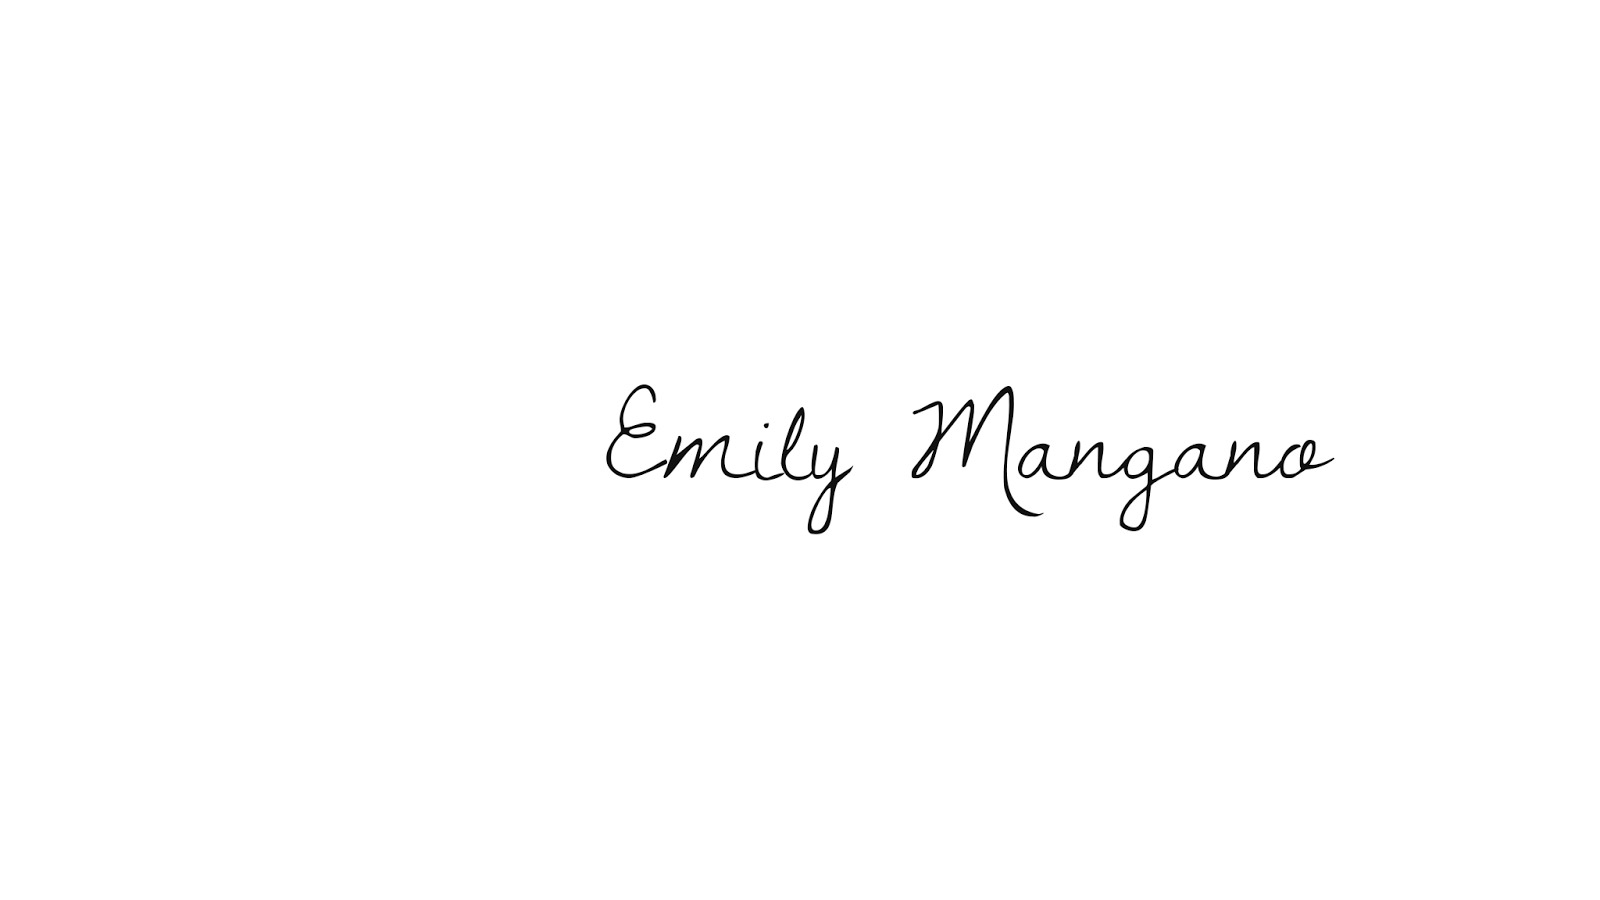 It's Emily Mango